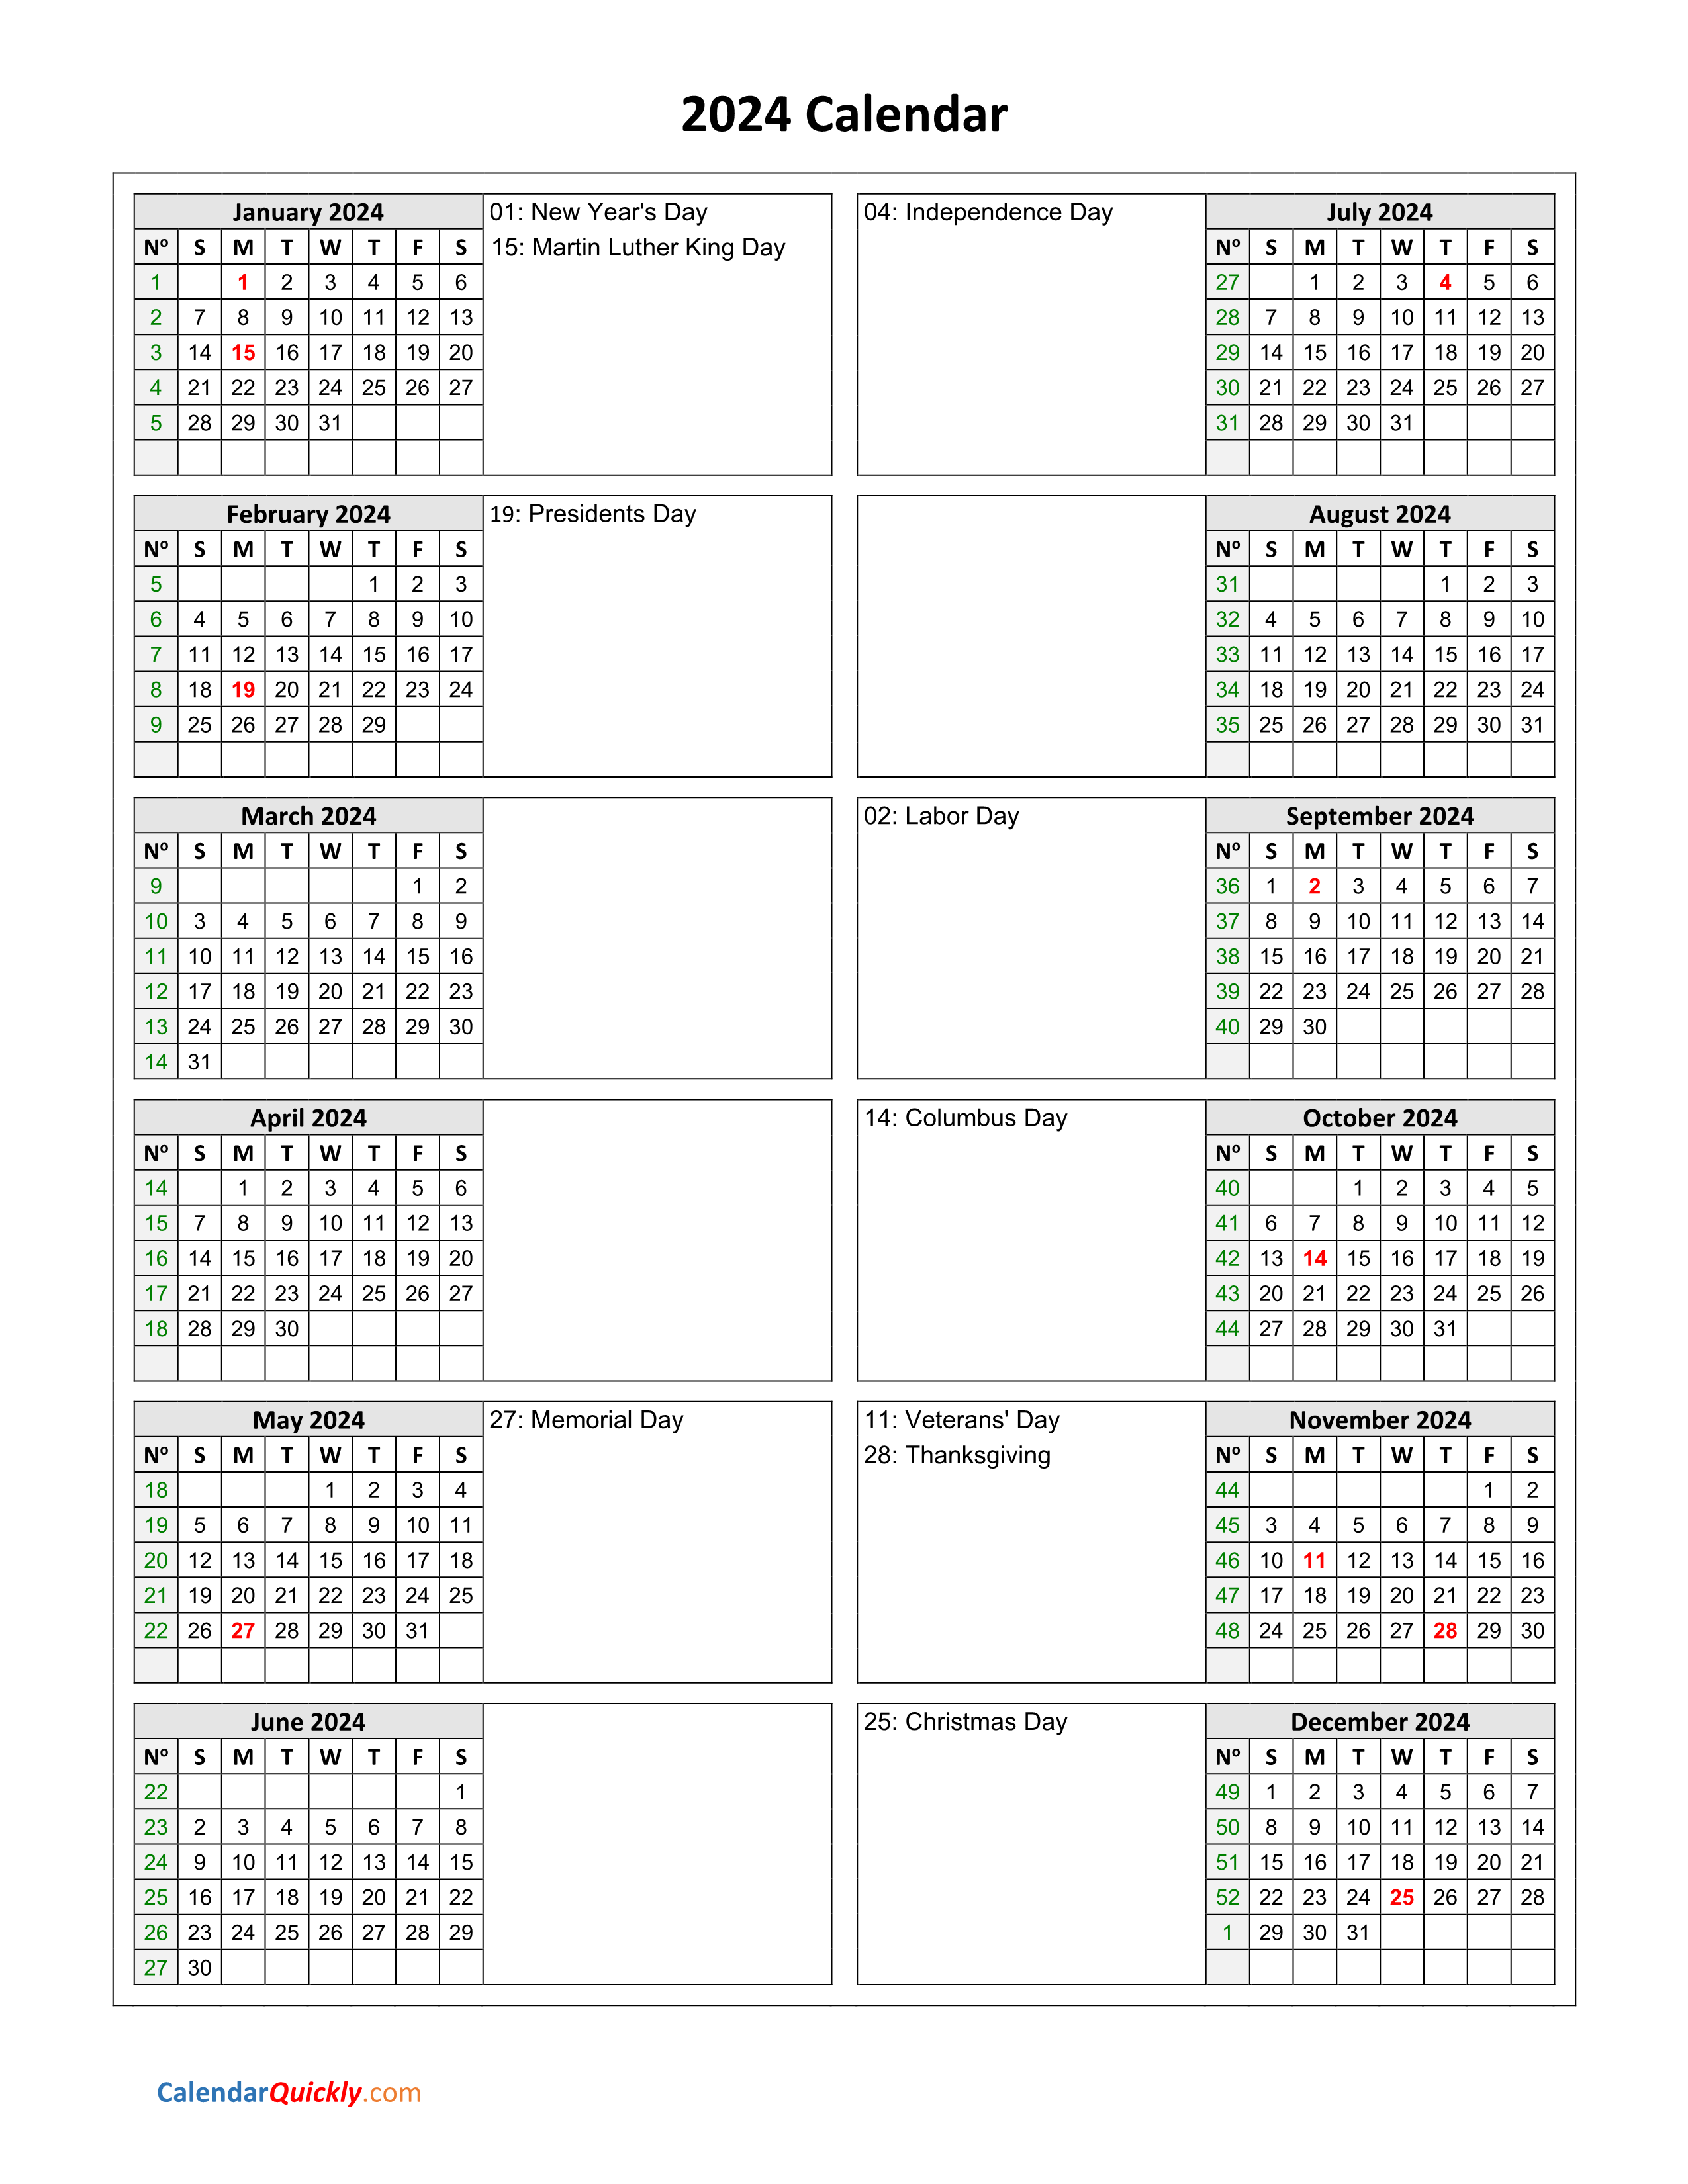 Printable Calendars 2024 Pdf Calendar 2024 With Federal Holidays - Free Printable 2024 Calendar With Holidays And Notes